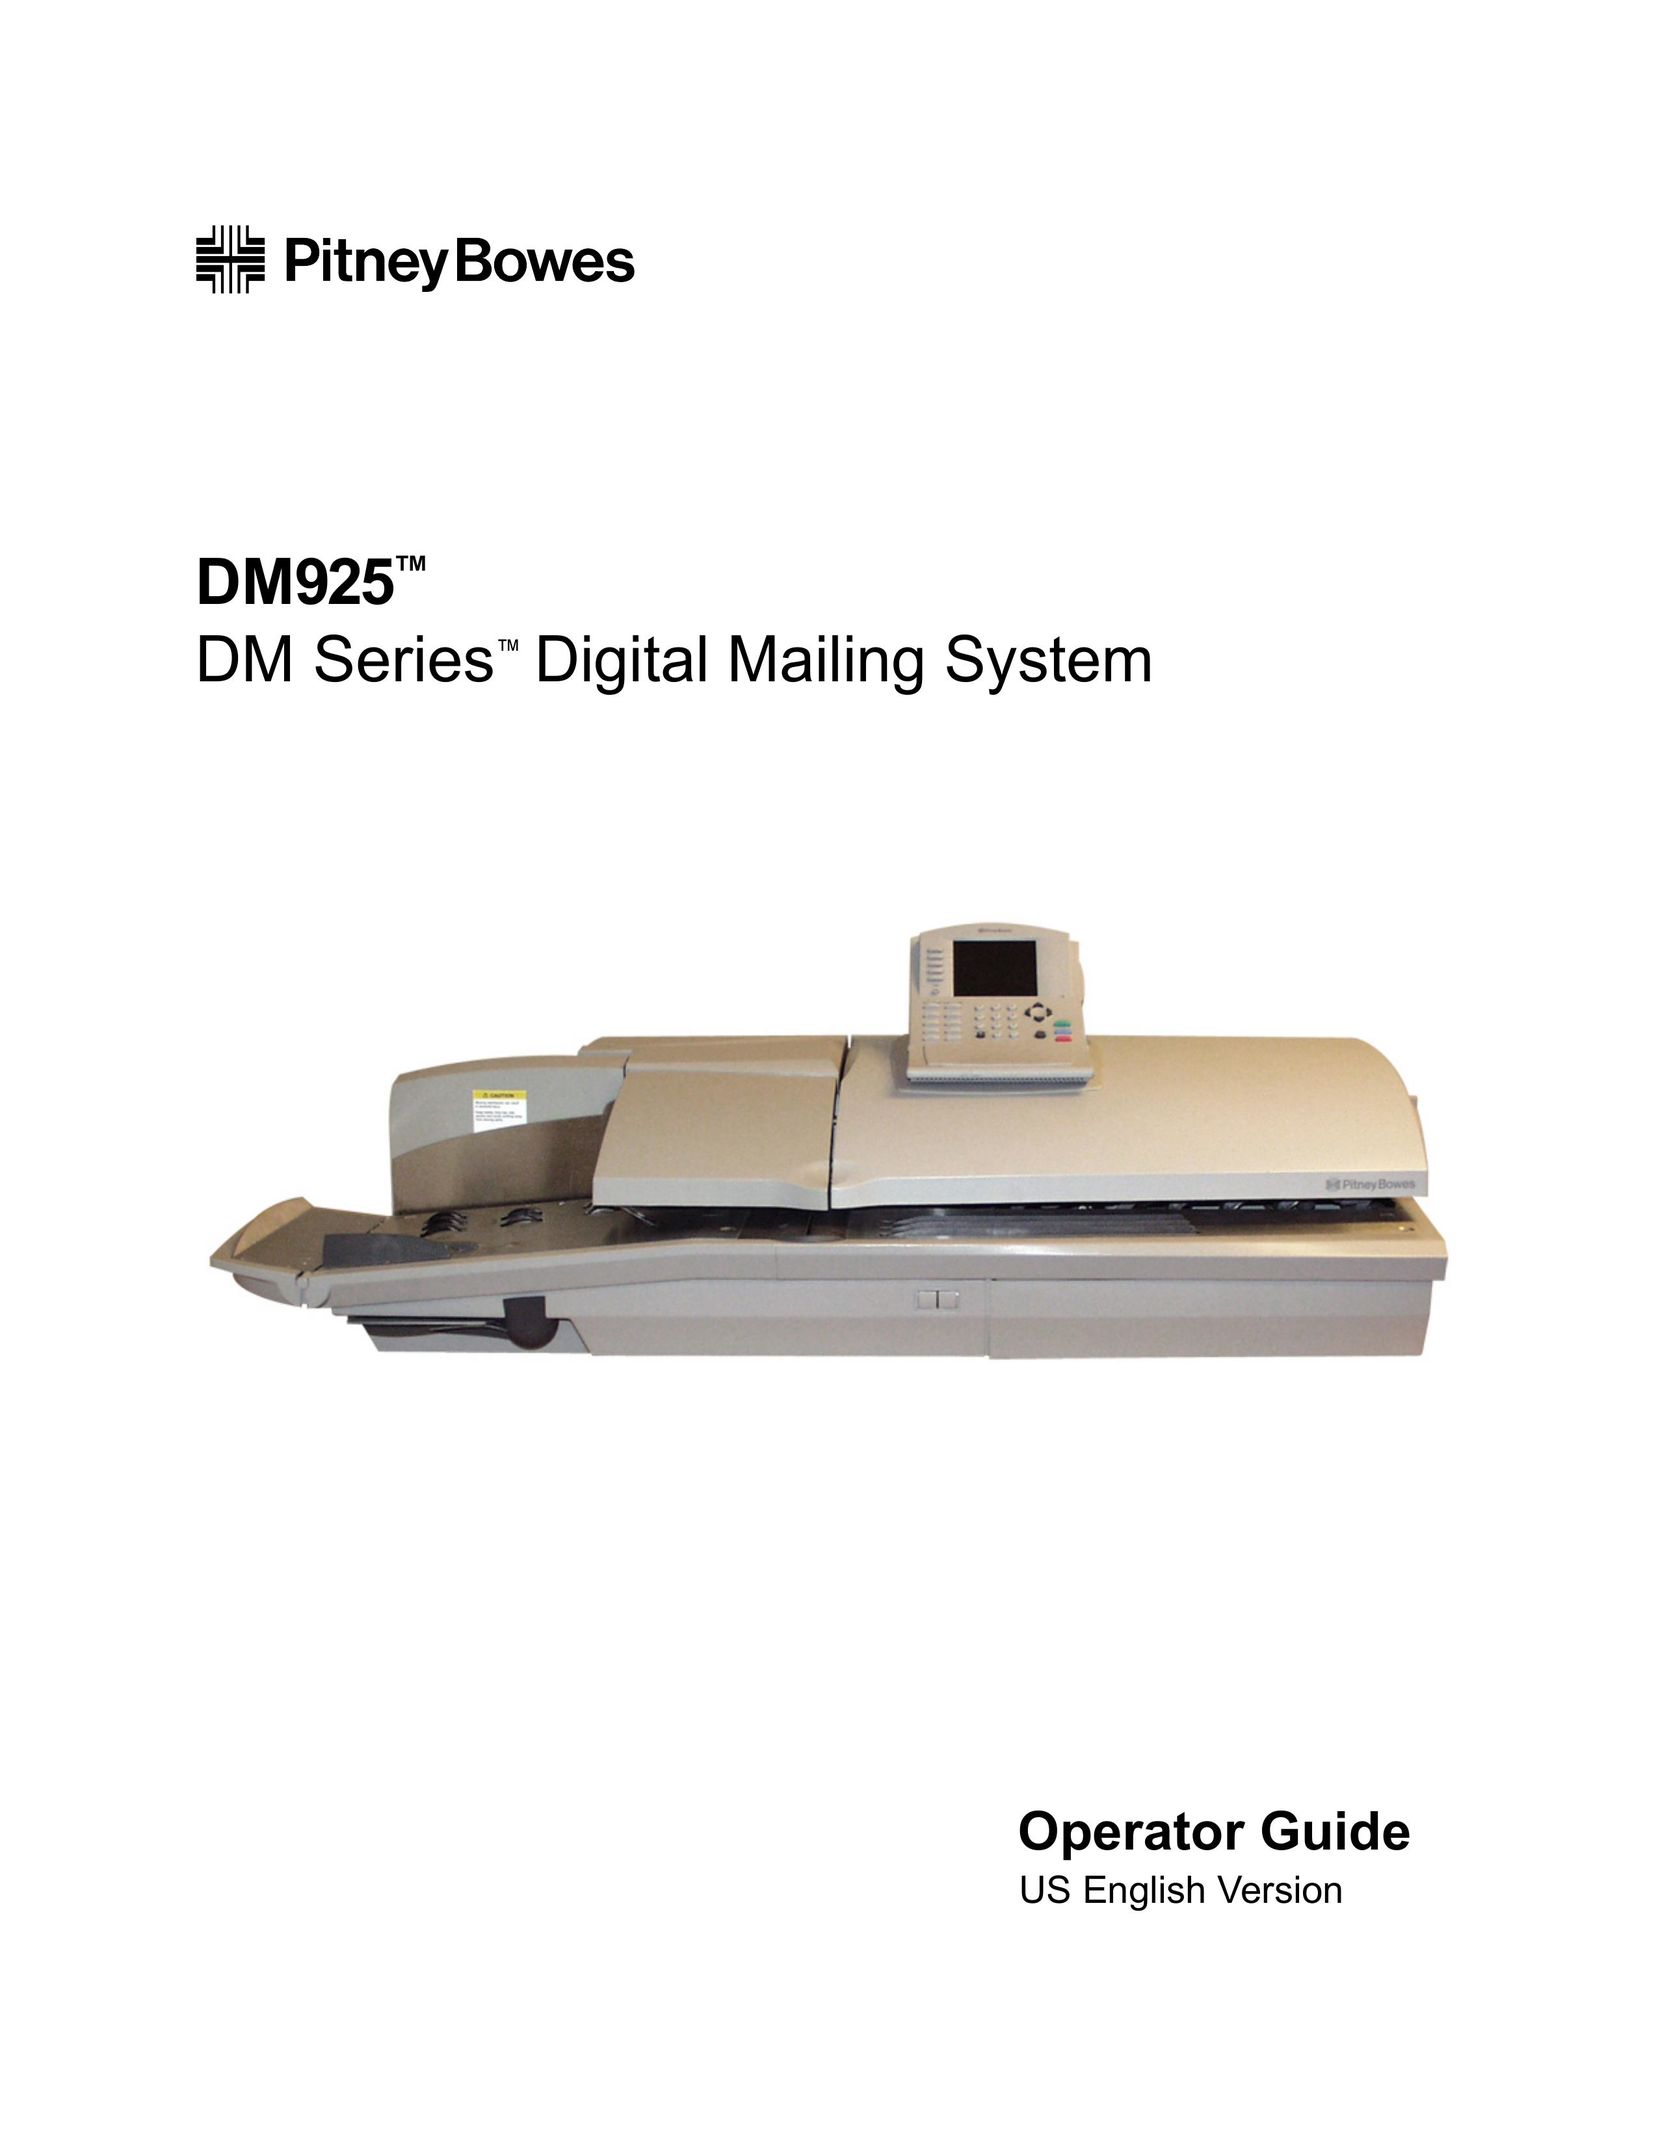 Pitney Bowes DM925 Postal Equipment User Manual